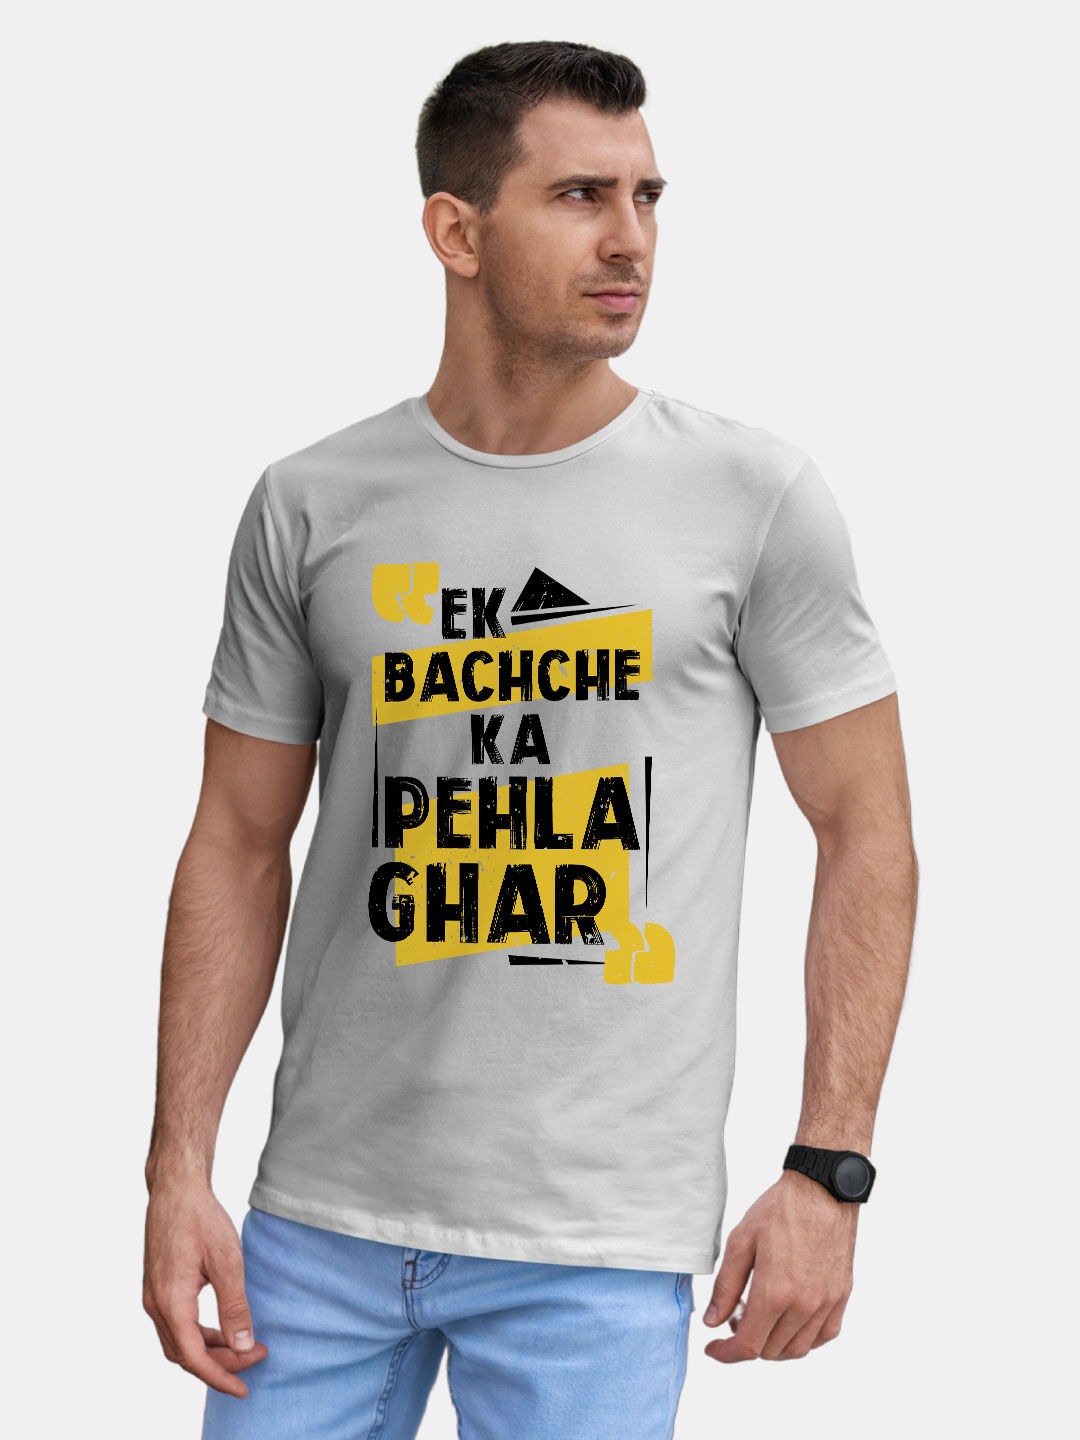 Buy Saregama Chutzpah T shirt Pehla Nasha Pehla Khumar